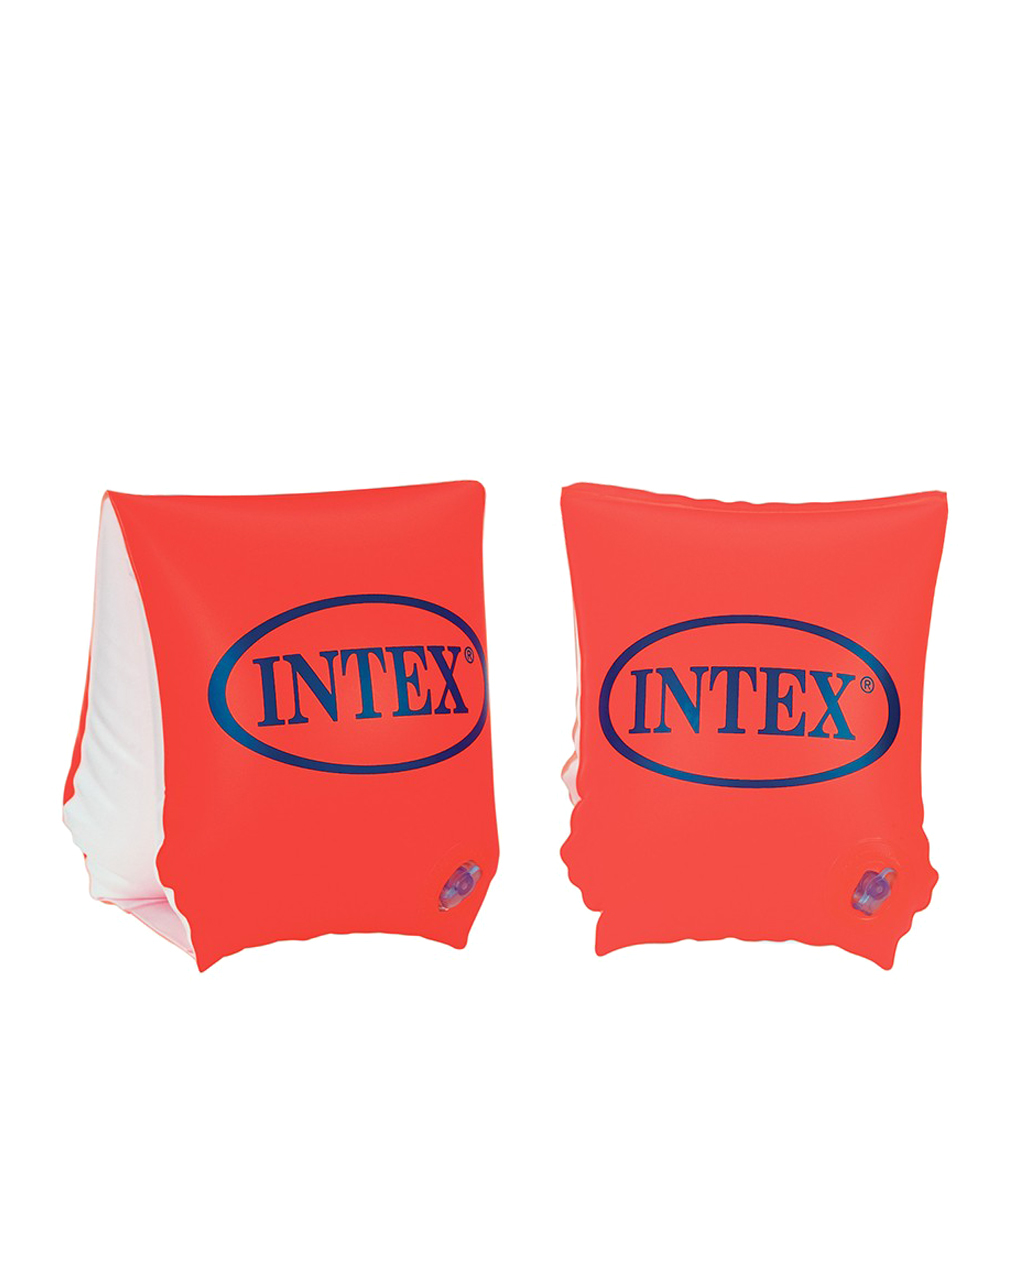 Intex μπρατσάκια κόκκινα 30x15 cm